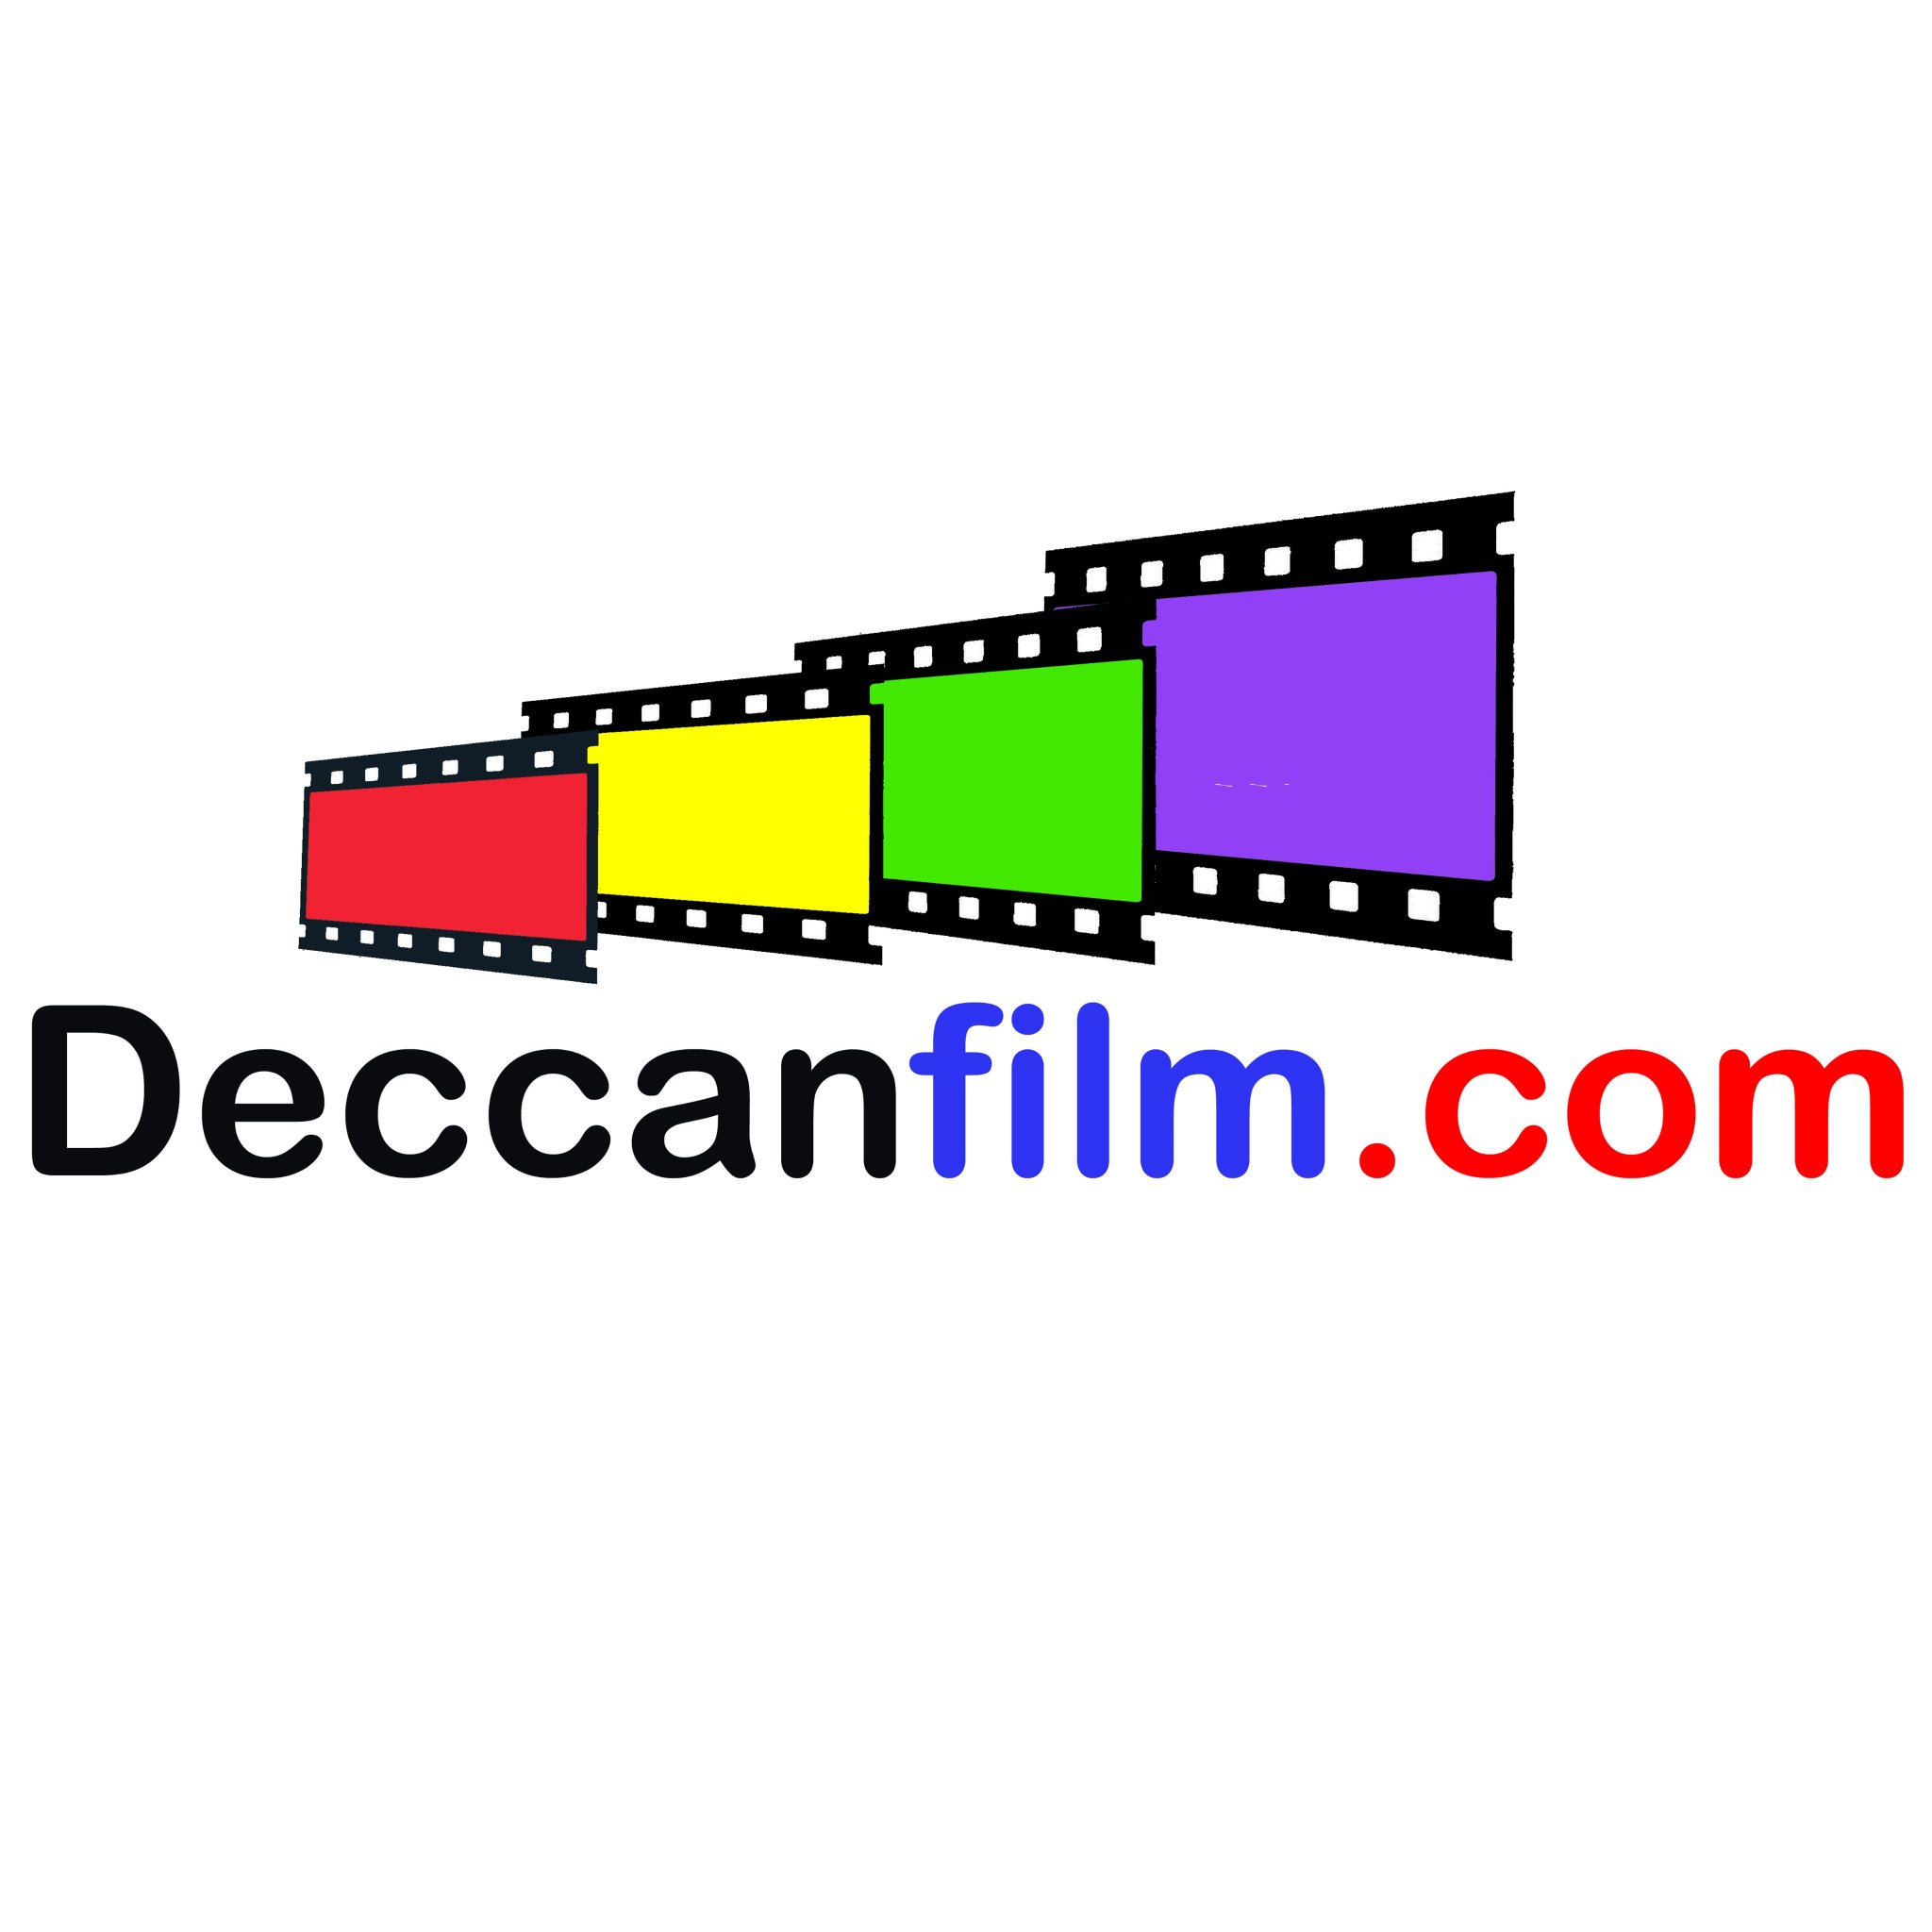 Deccanfilm.com